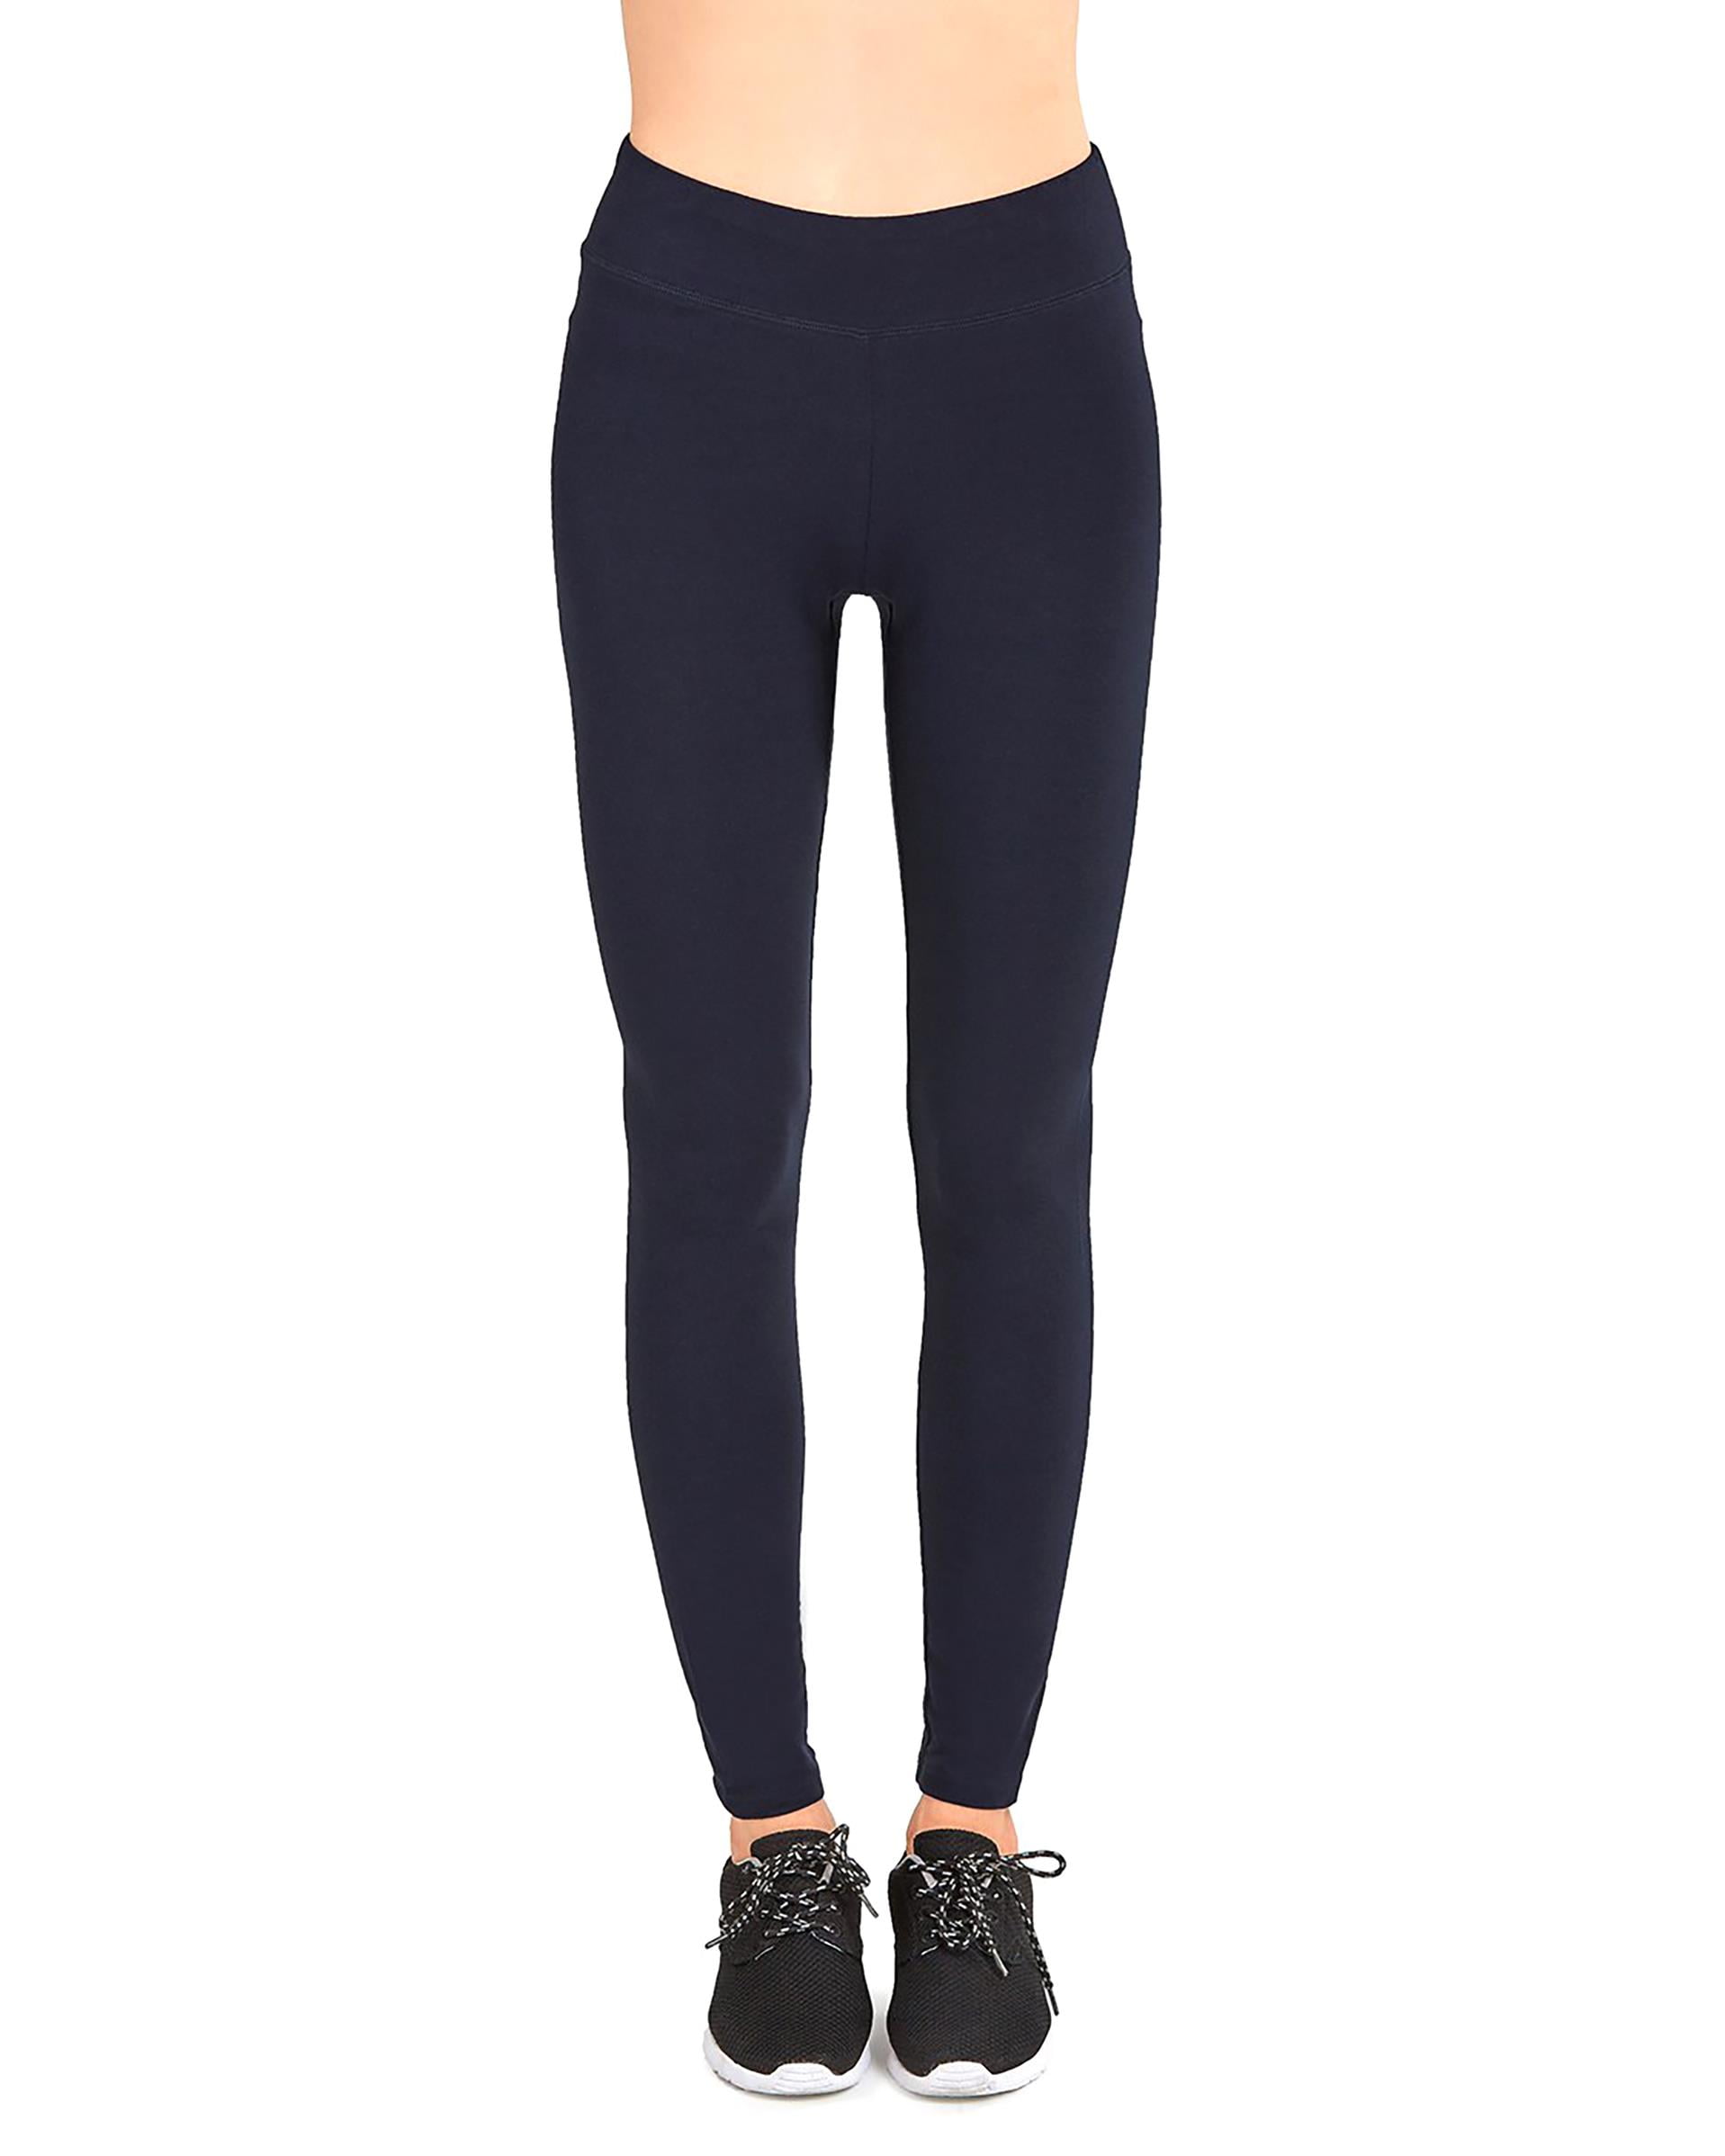 DailyWear Womens Solid Knee Length Short Yoga Cotton Leggings Black, 3Xlarge